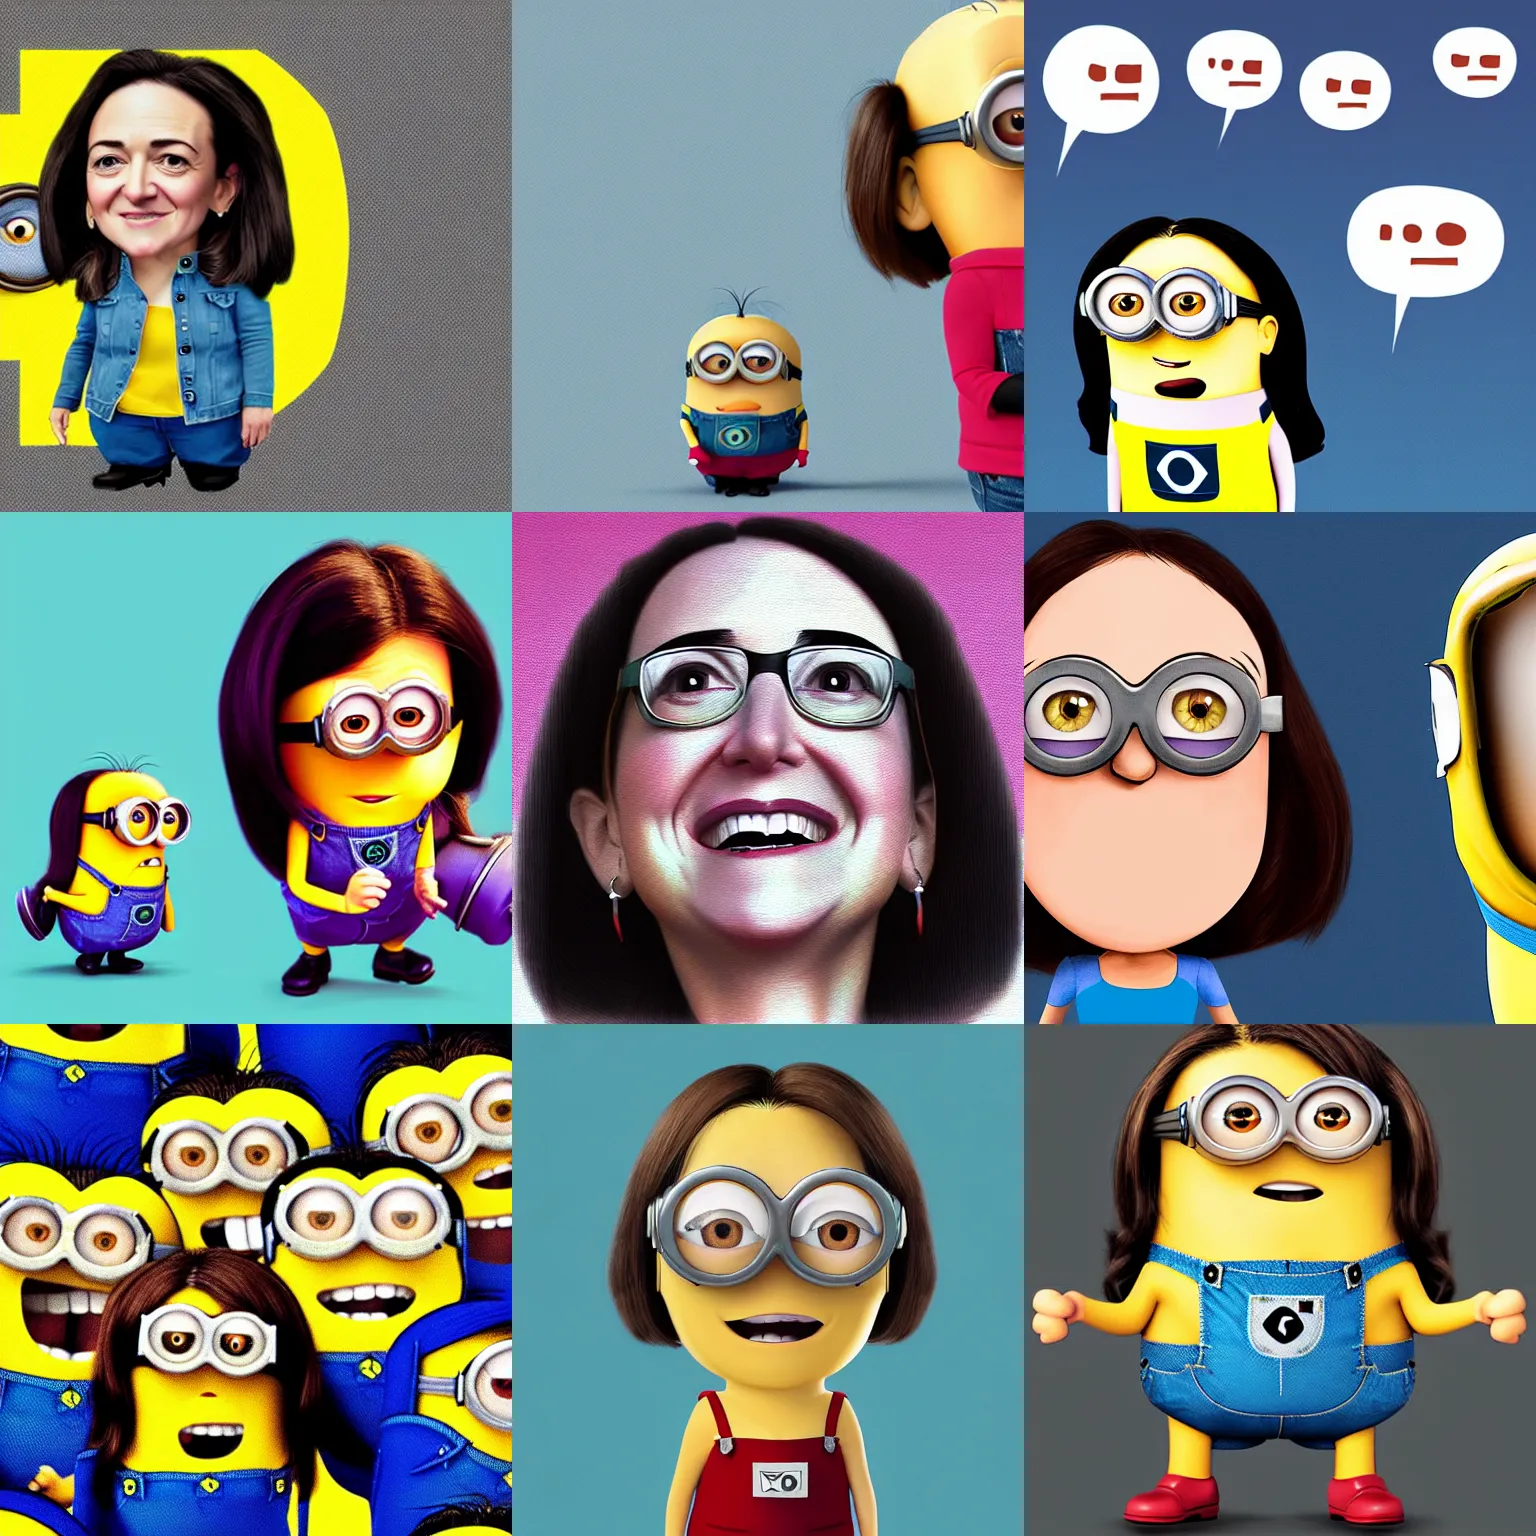 Prompt: Sheryl Sandberg as a Minion, digital art